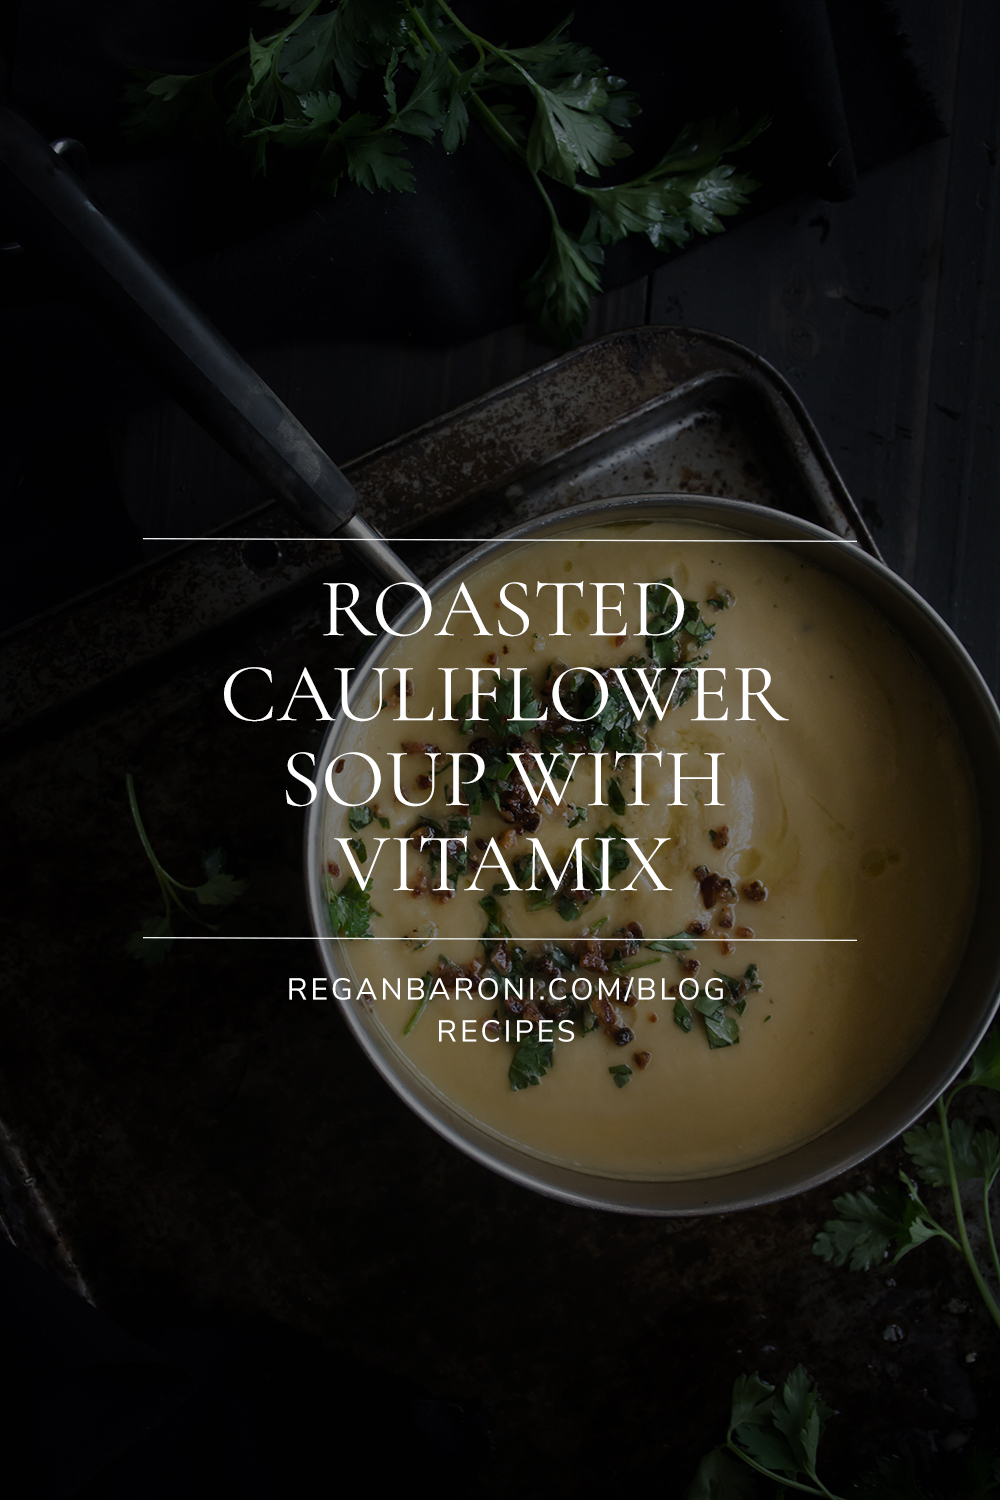 Roasted Cauliflower Soup with Vitamix